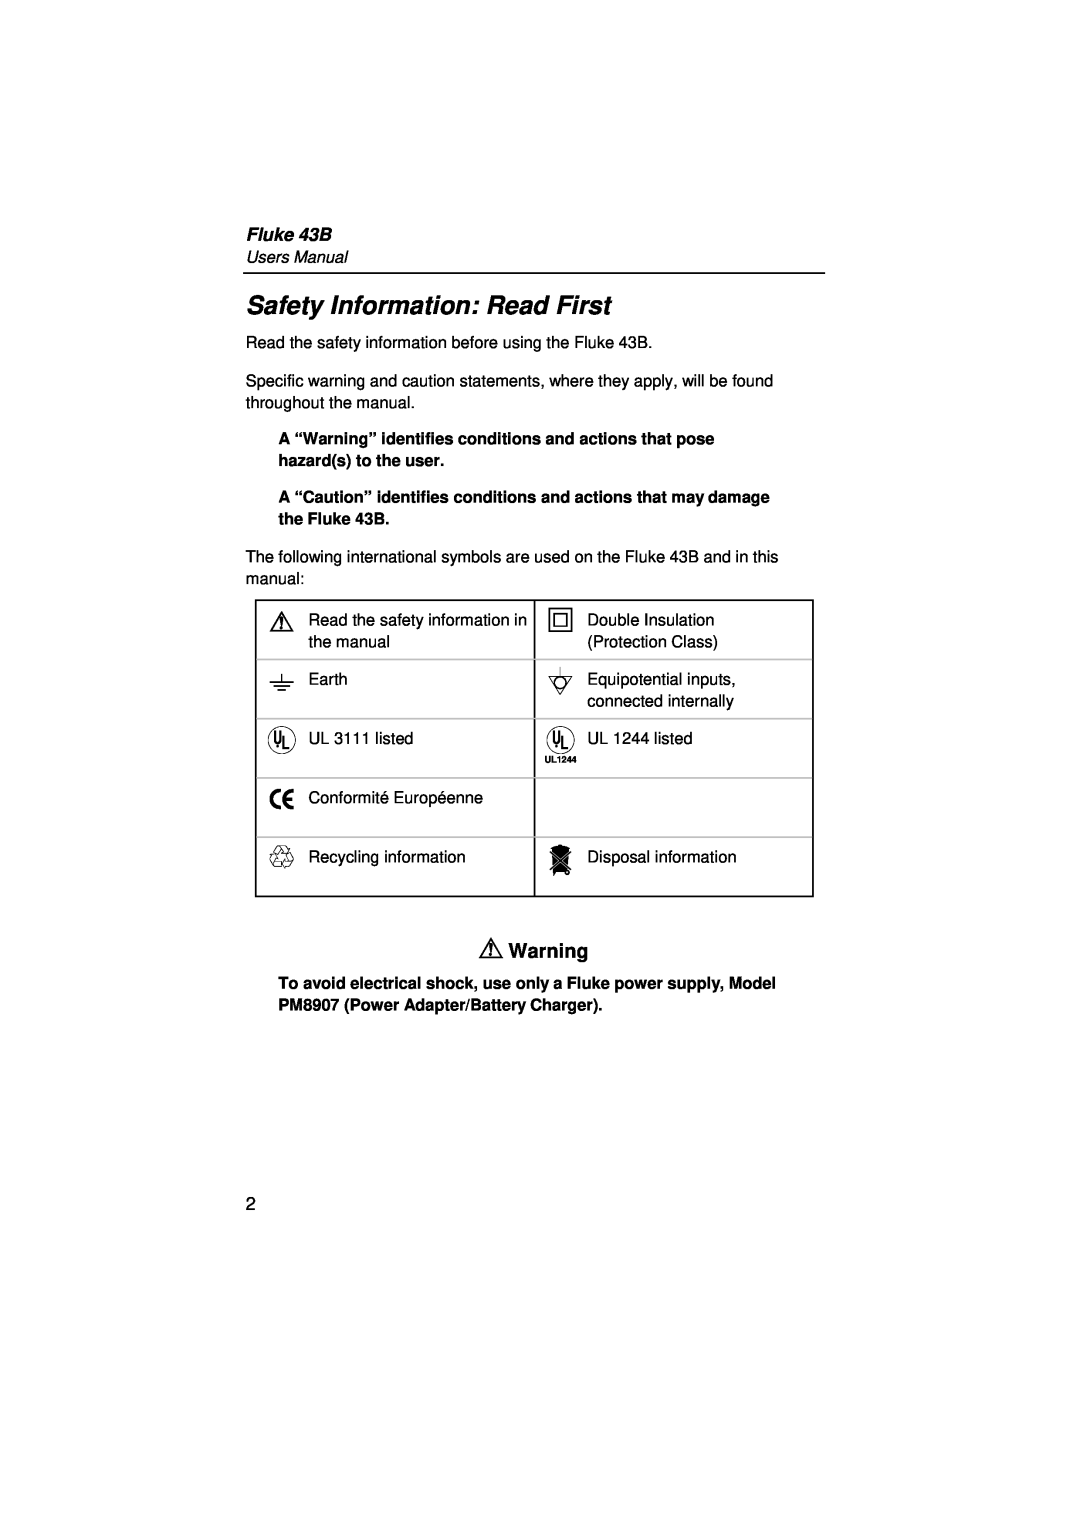 Fluke user manual Safety Information Read First, Fluke 43B 